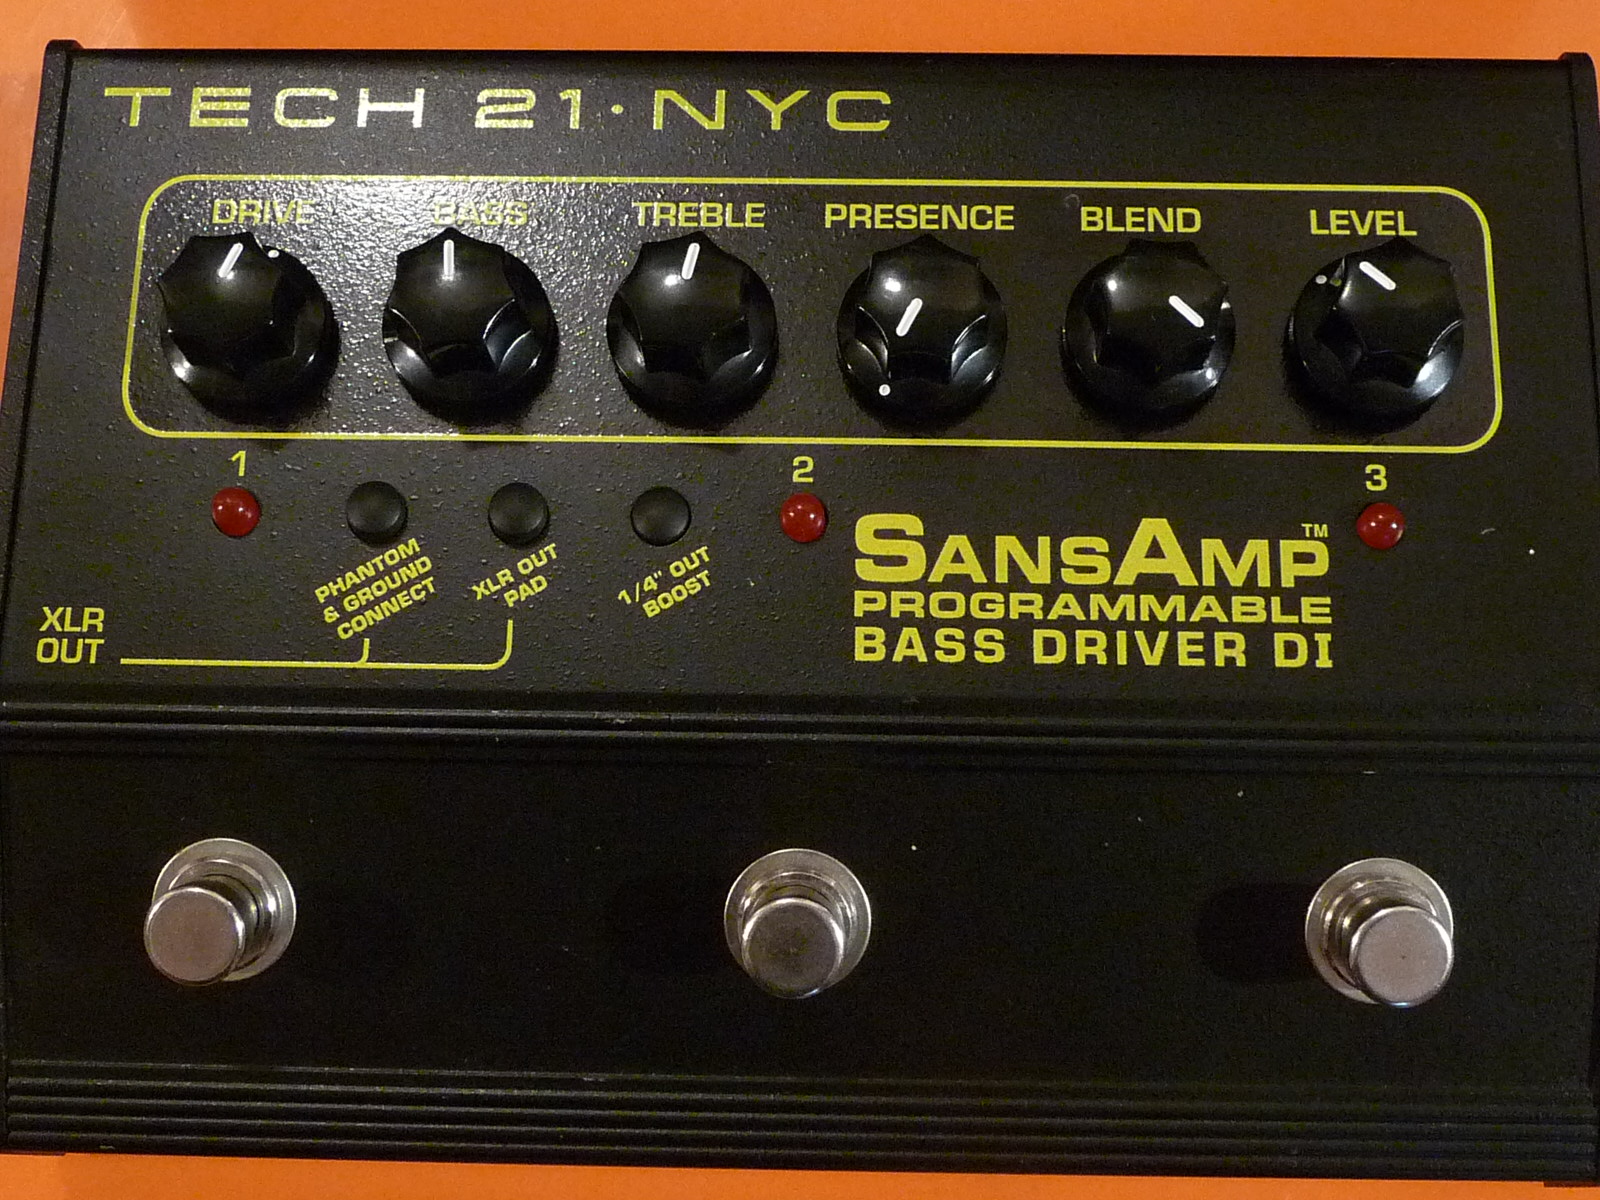 Tech 21 SansAmp Bass Driver DI Programmable image (#496832) - Audiofanzine